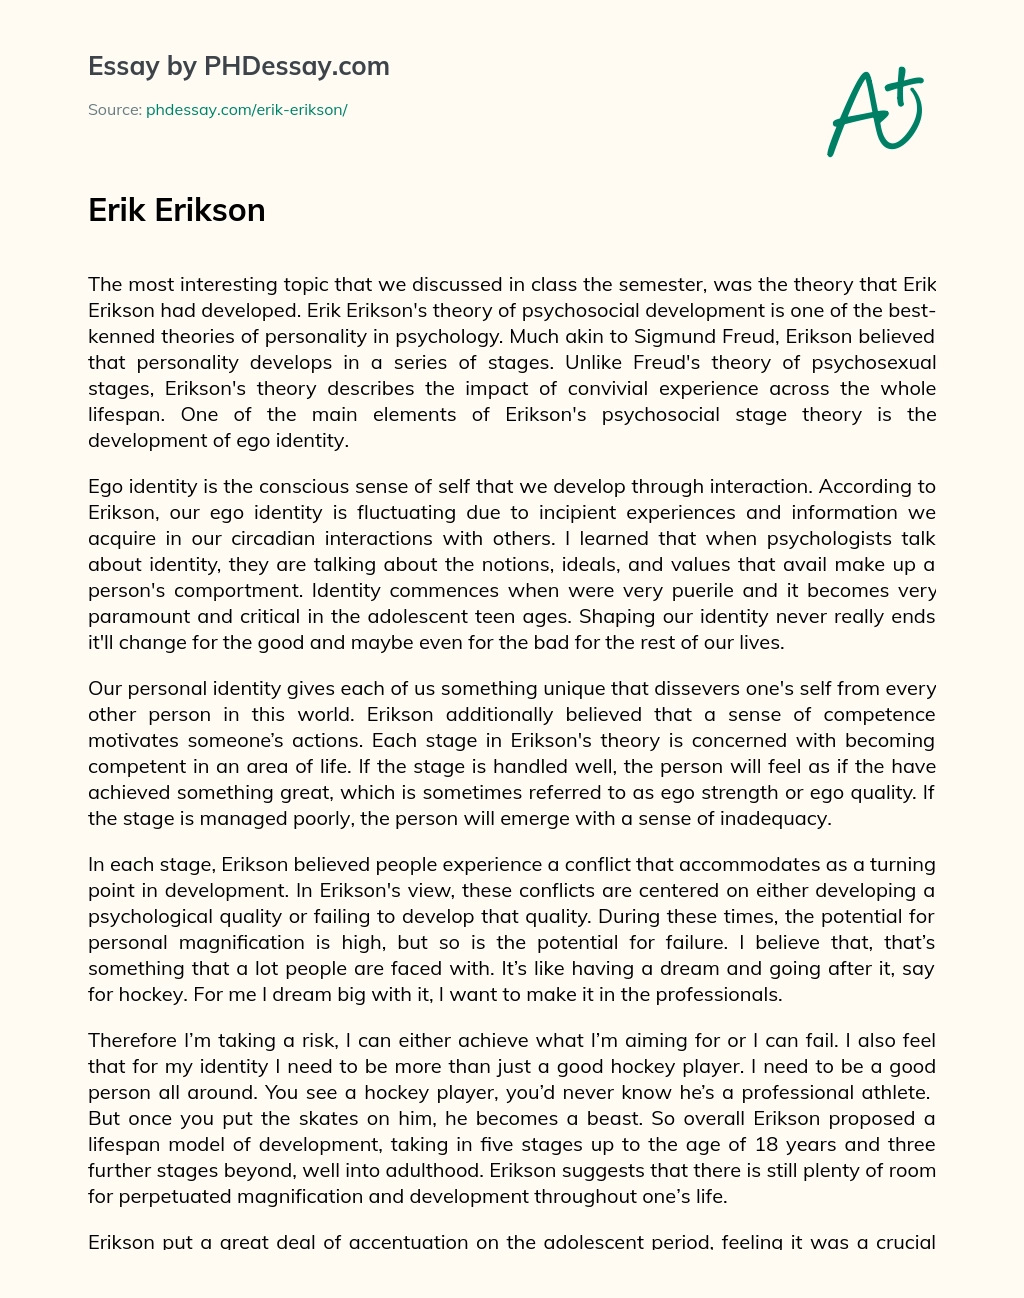 The Fascinating Theory of Erik Erikson’s Psychosocial Development essay